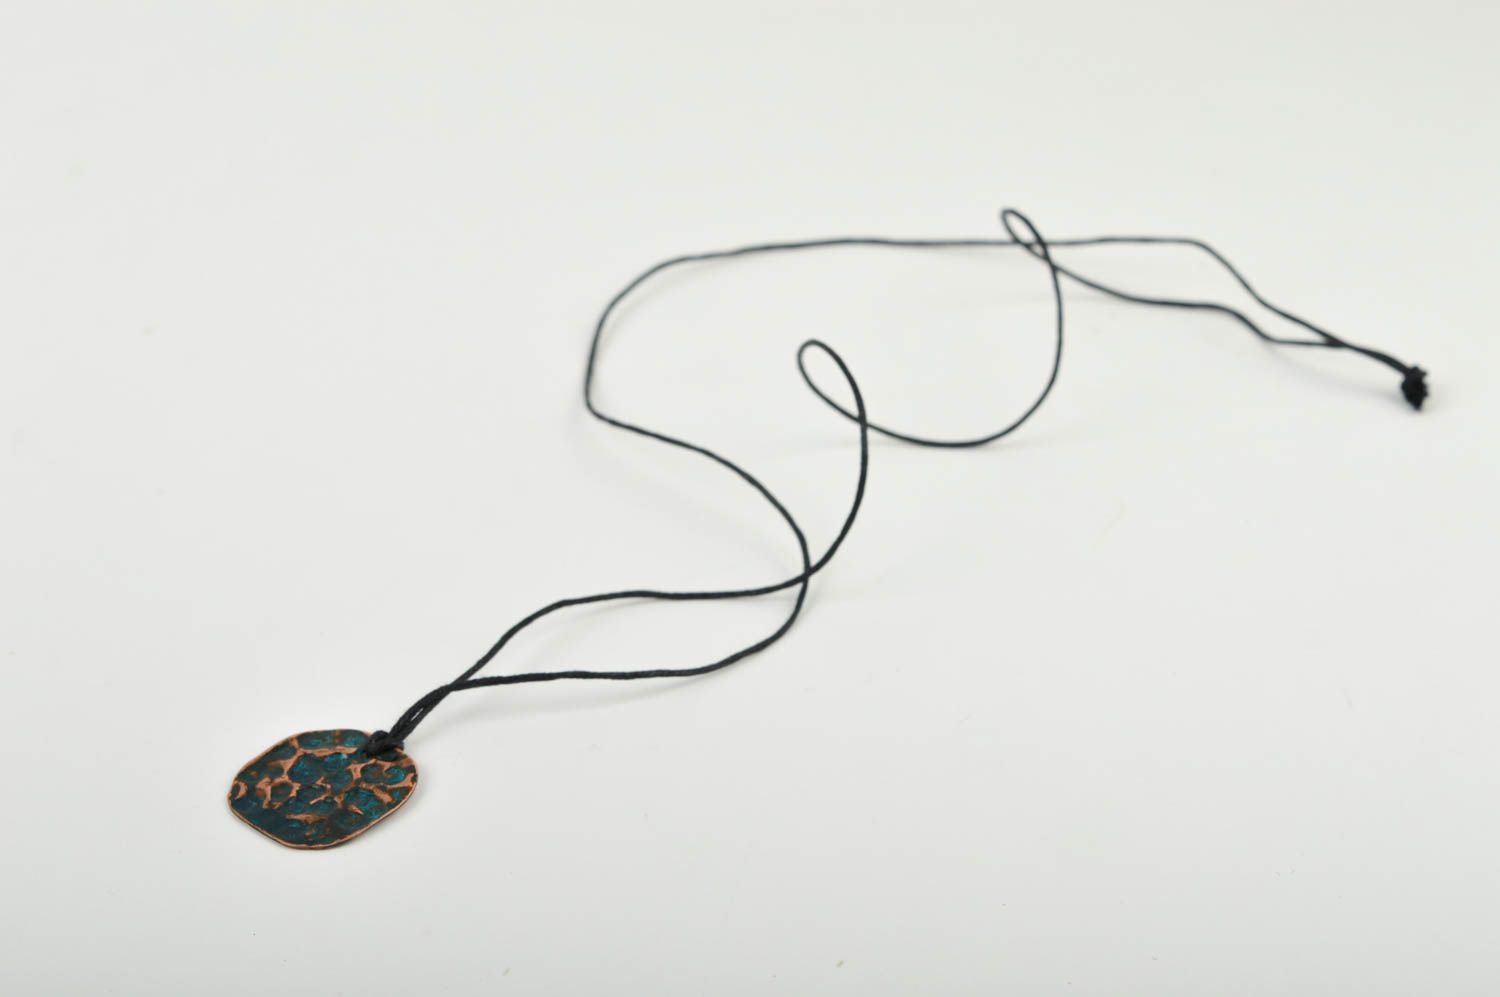 Stylish handmade copper pendant fashion trends metal neck accessories ideas photo 3